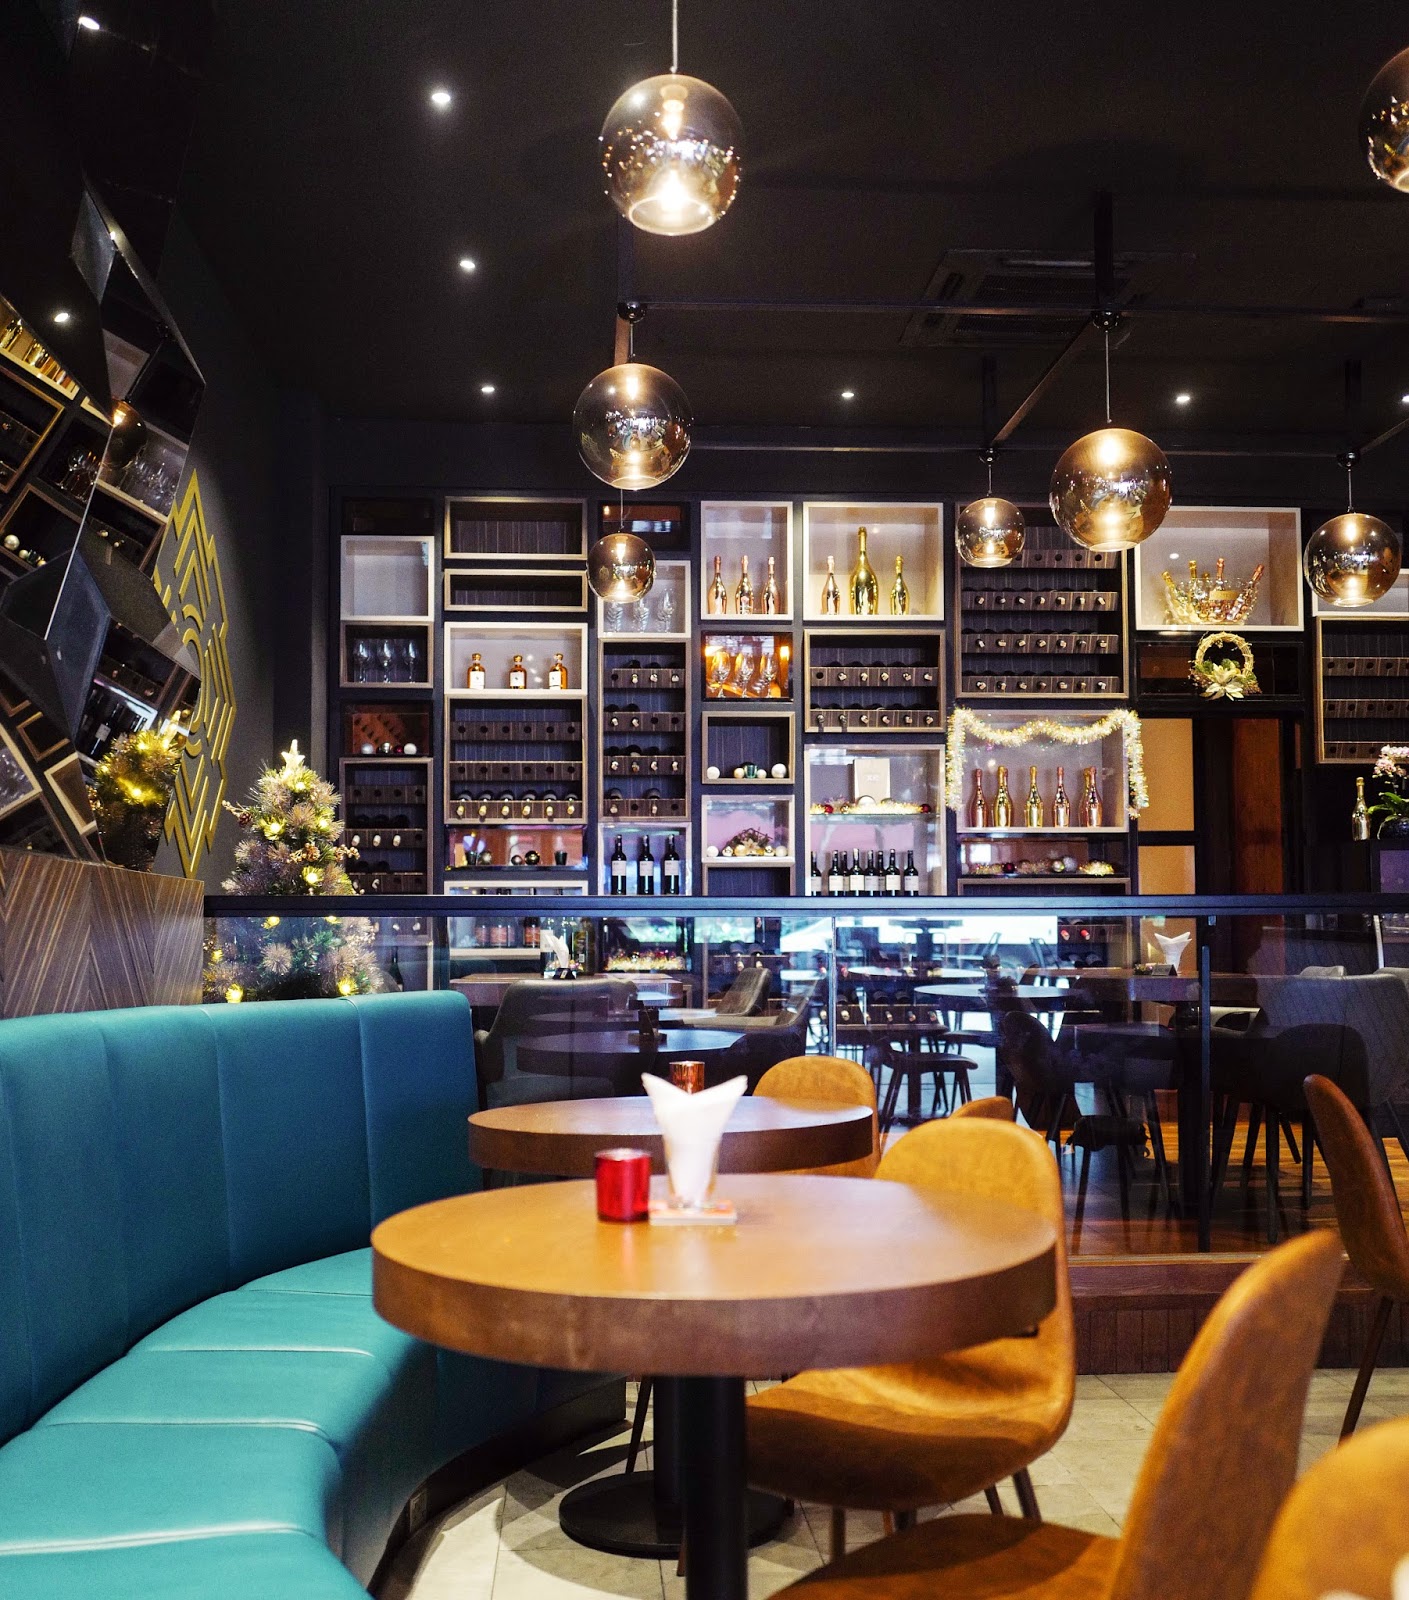 Mandala Cafe and Bar at Solaris Dutamas: Restaurant Review - EatDrink